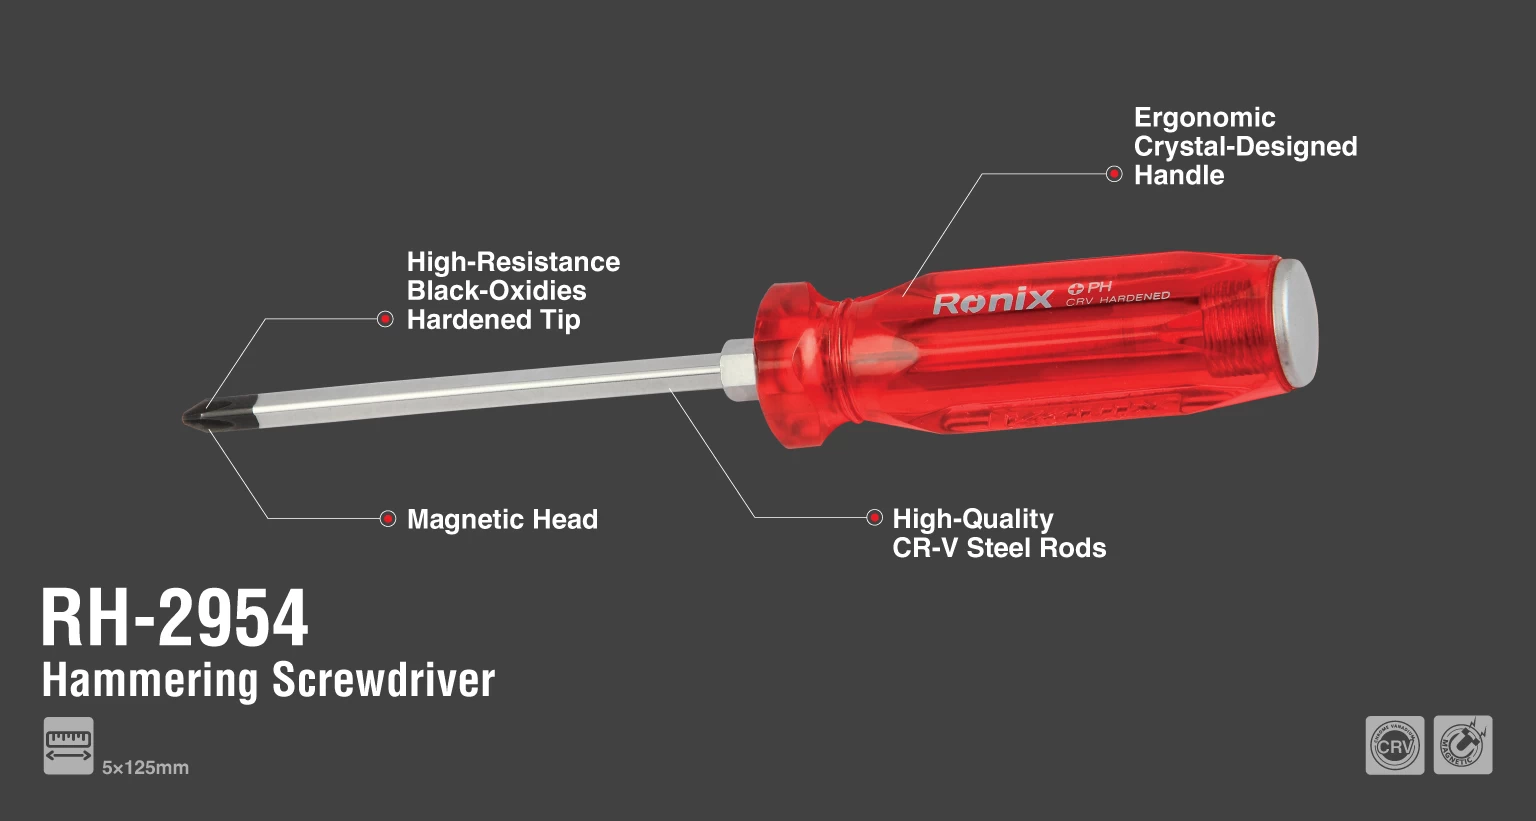 hammering-screwdriver-5-125mm-phillips-rh-2954_details